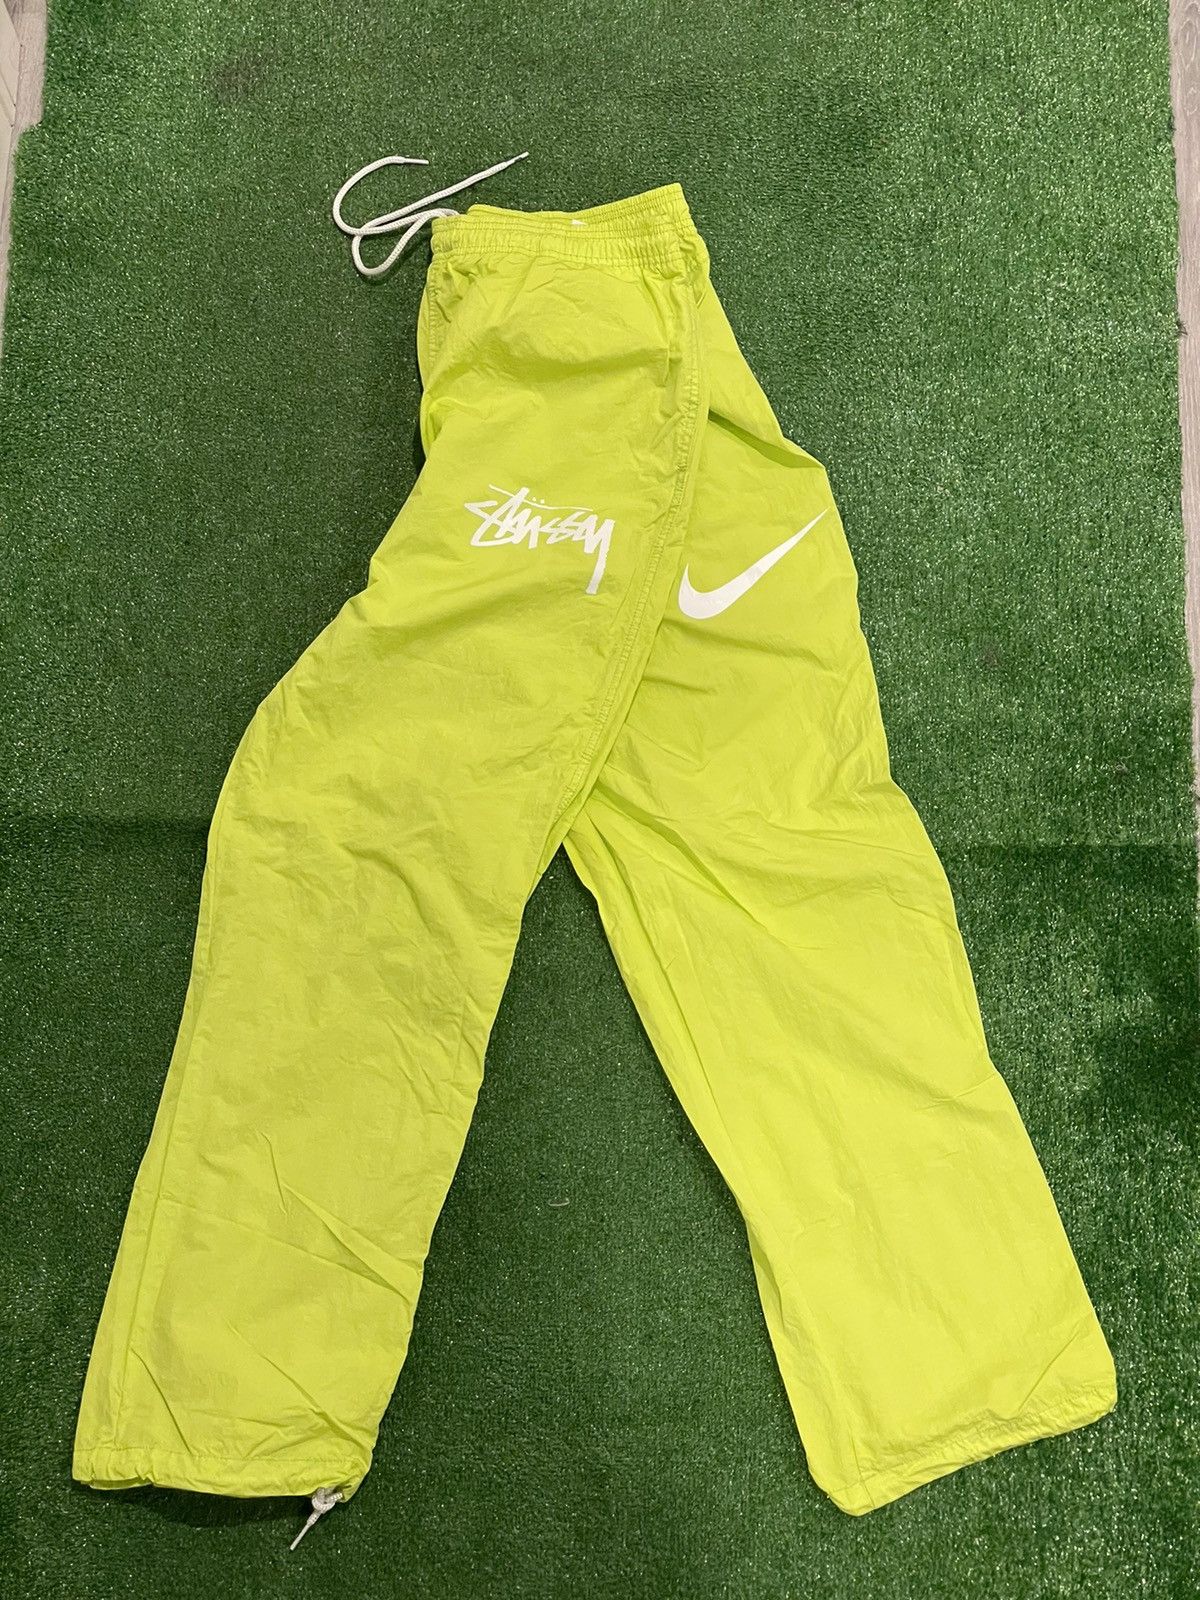 Nike Stussy Beach Pants | Grailed